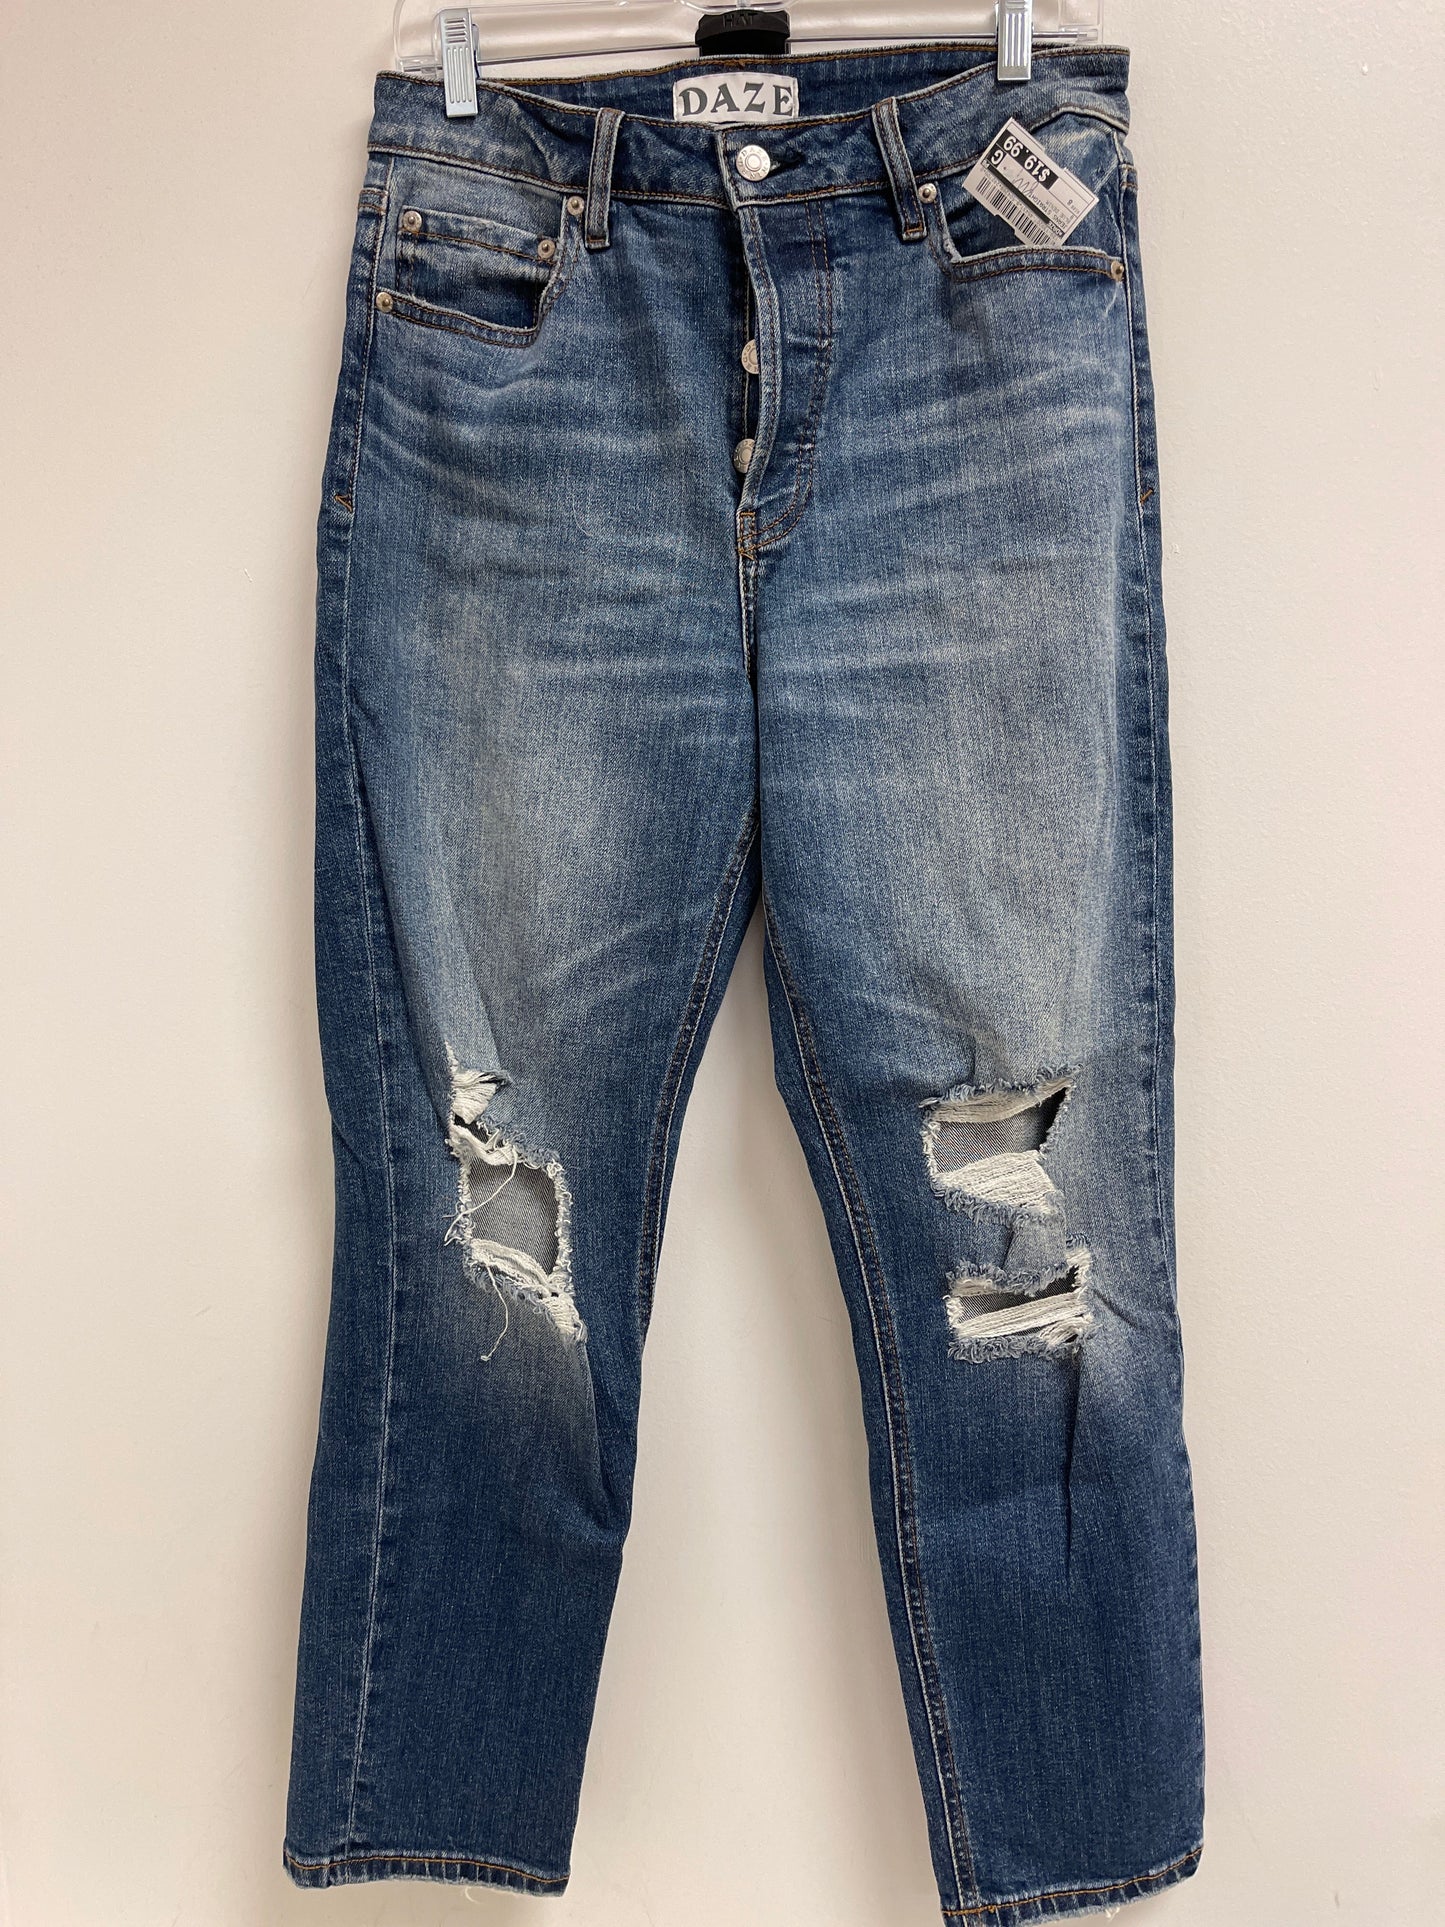 Blue Denim Jeans Straight Daze, Size 8